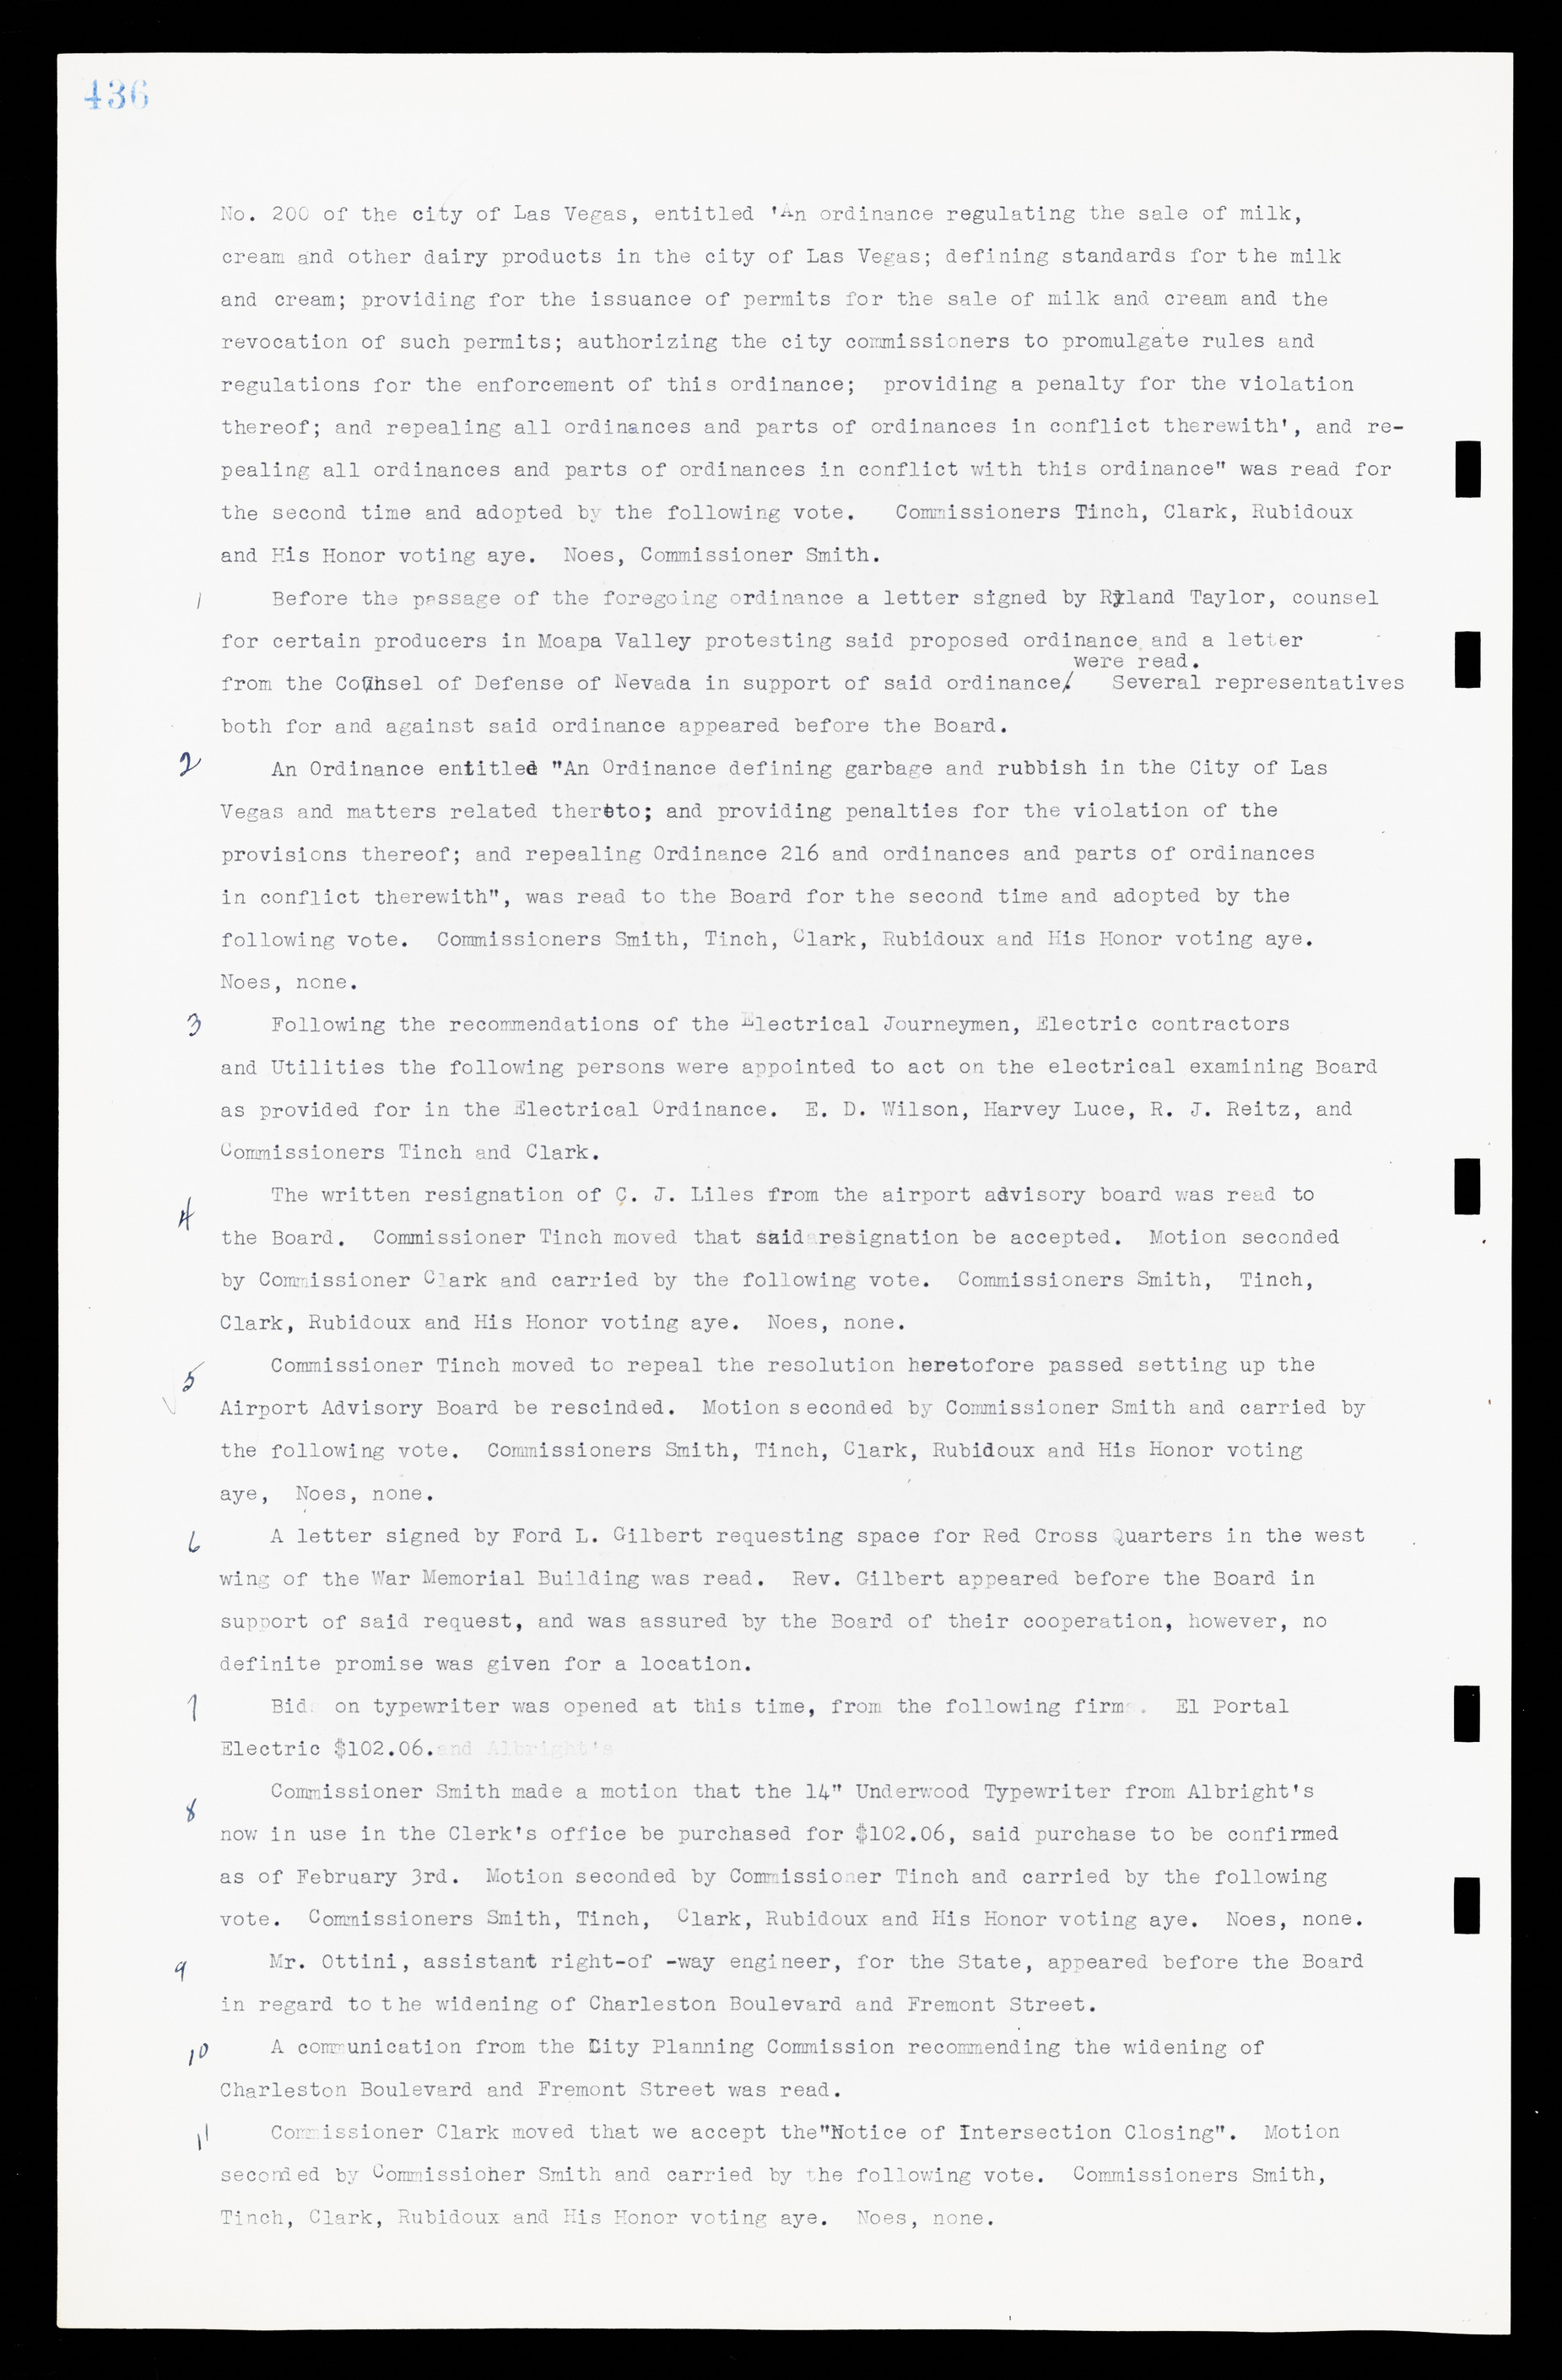 Las Vegas City Commission Minutes, February 17, 1937 to August 4, 1942, lvc000004-464